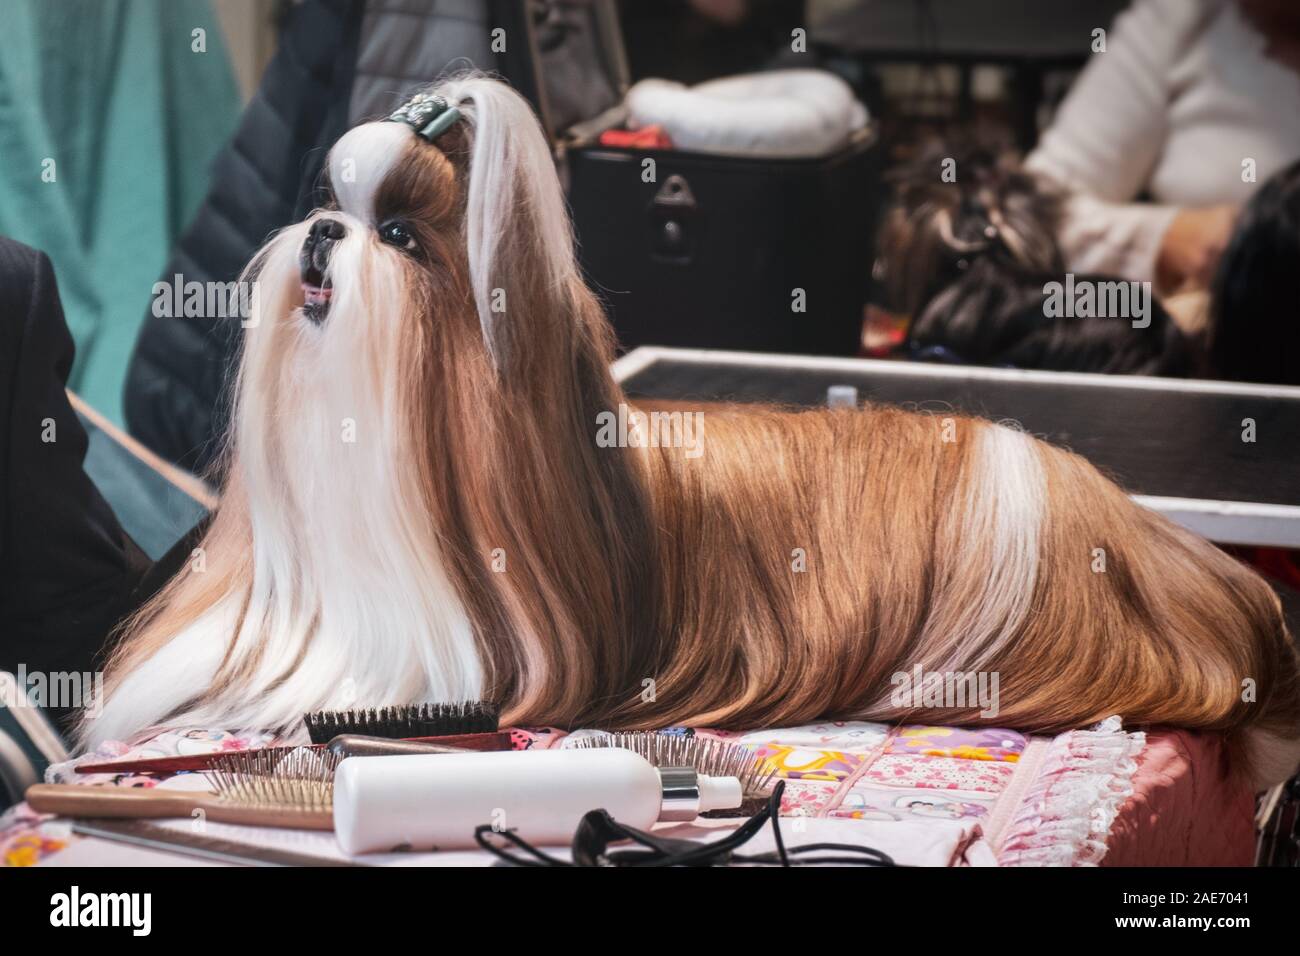 Parrucchiere cane Lhasa Apso shih tzu toelettatura pettinatura pelliccia di spazzolatura dog show Foto Stock